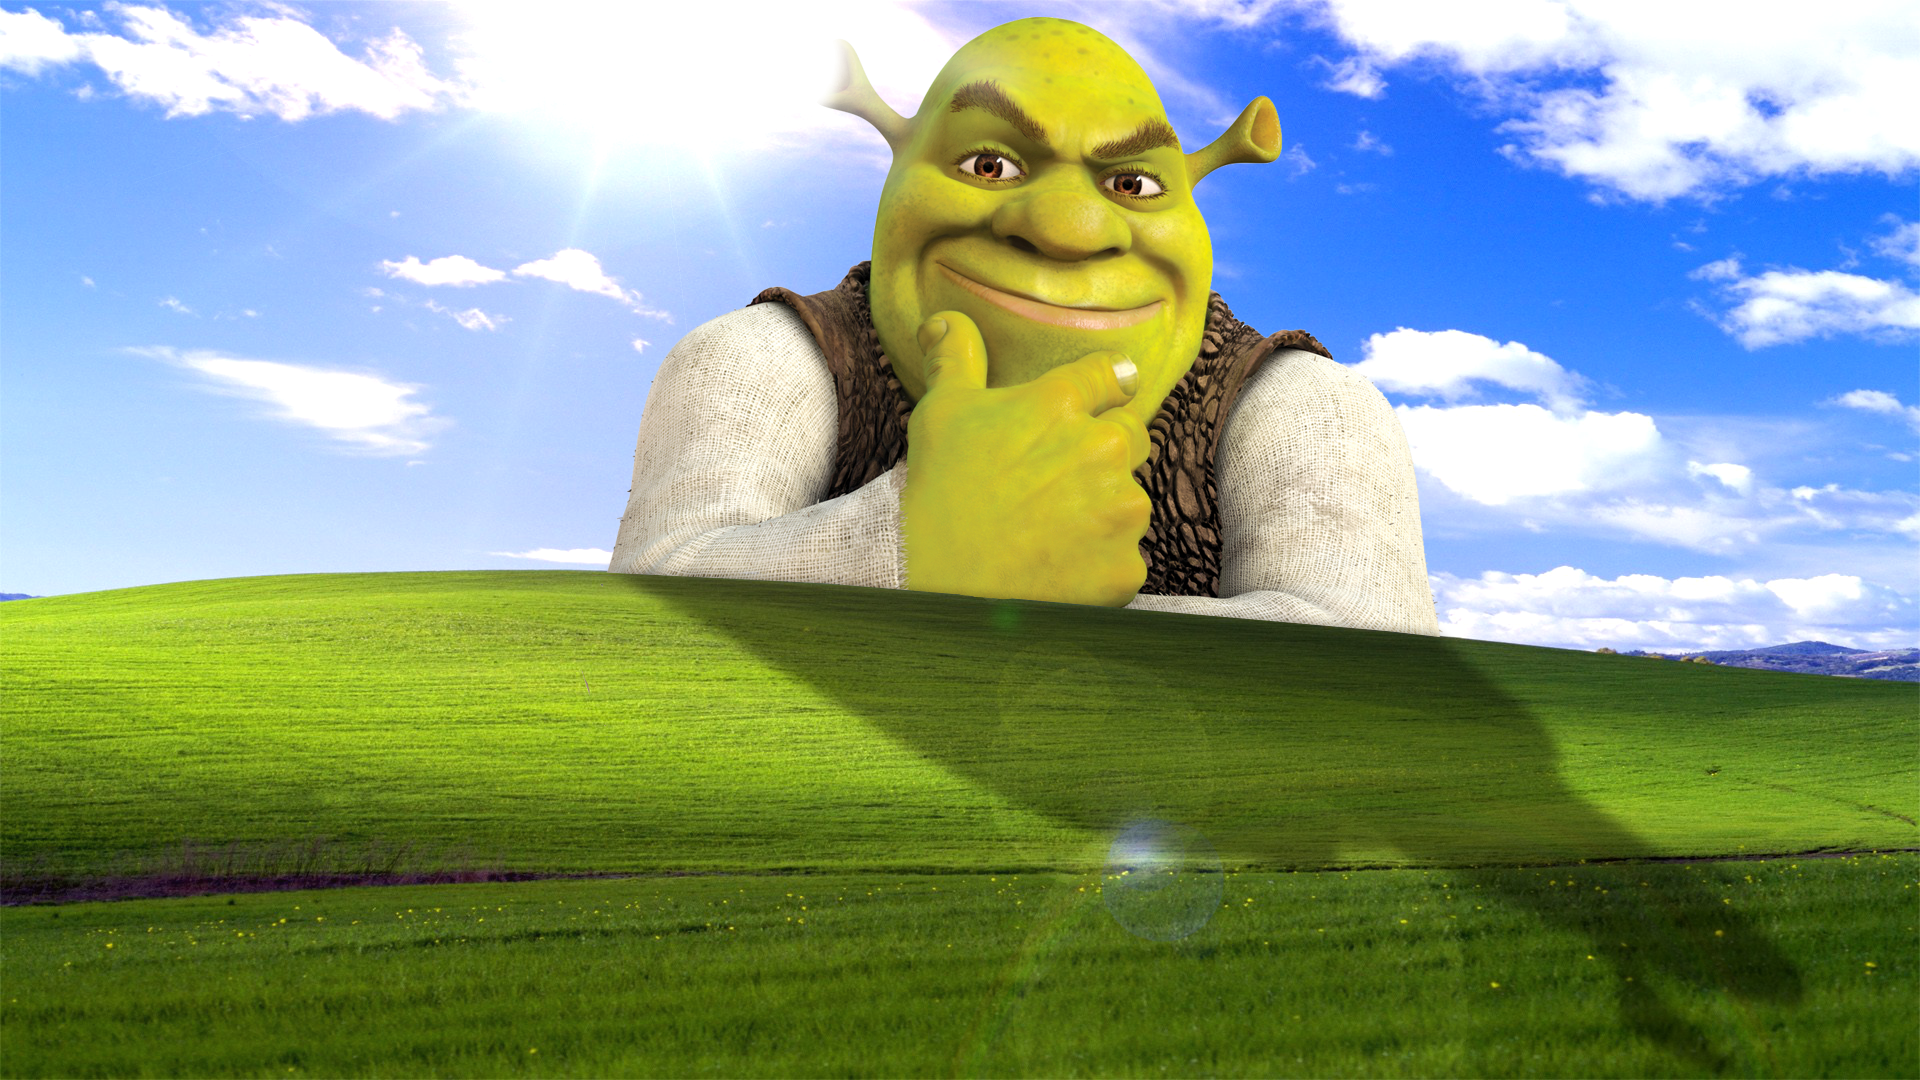 Meme Shrek Wallpapers in 2020.